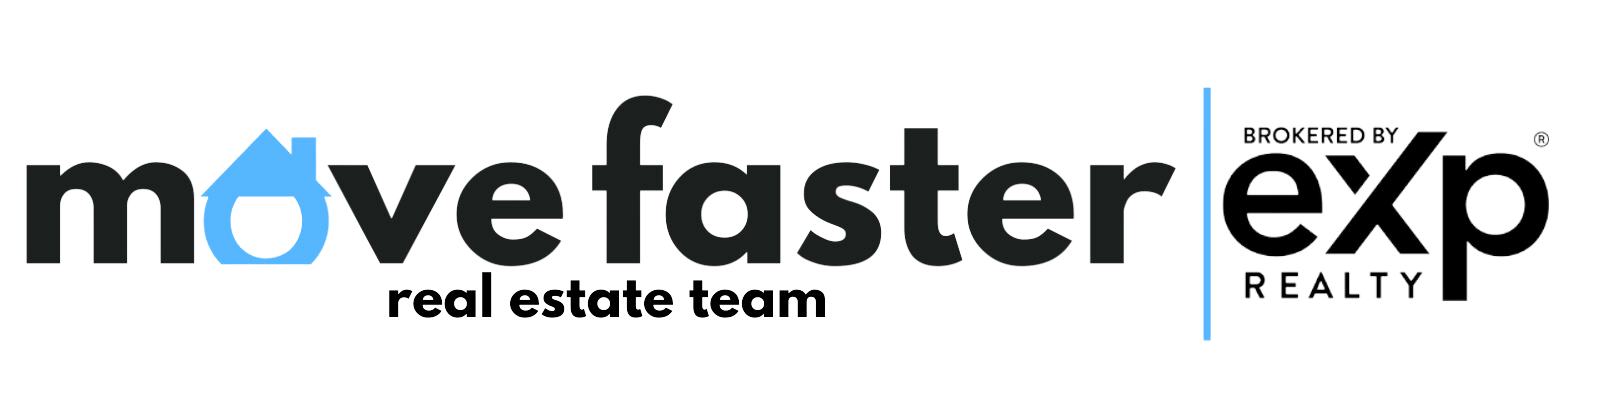 Move-faster-real-estate-team